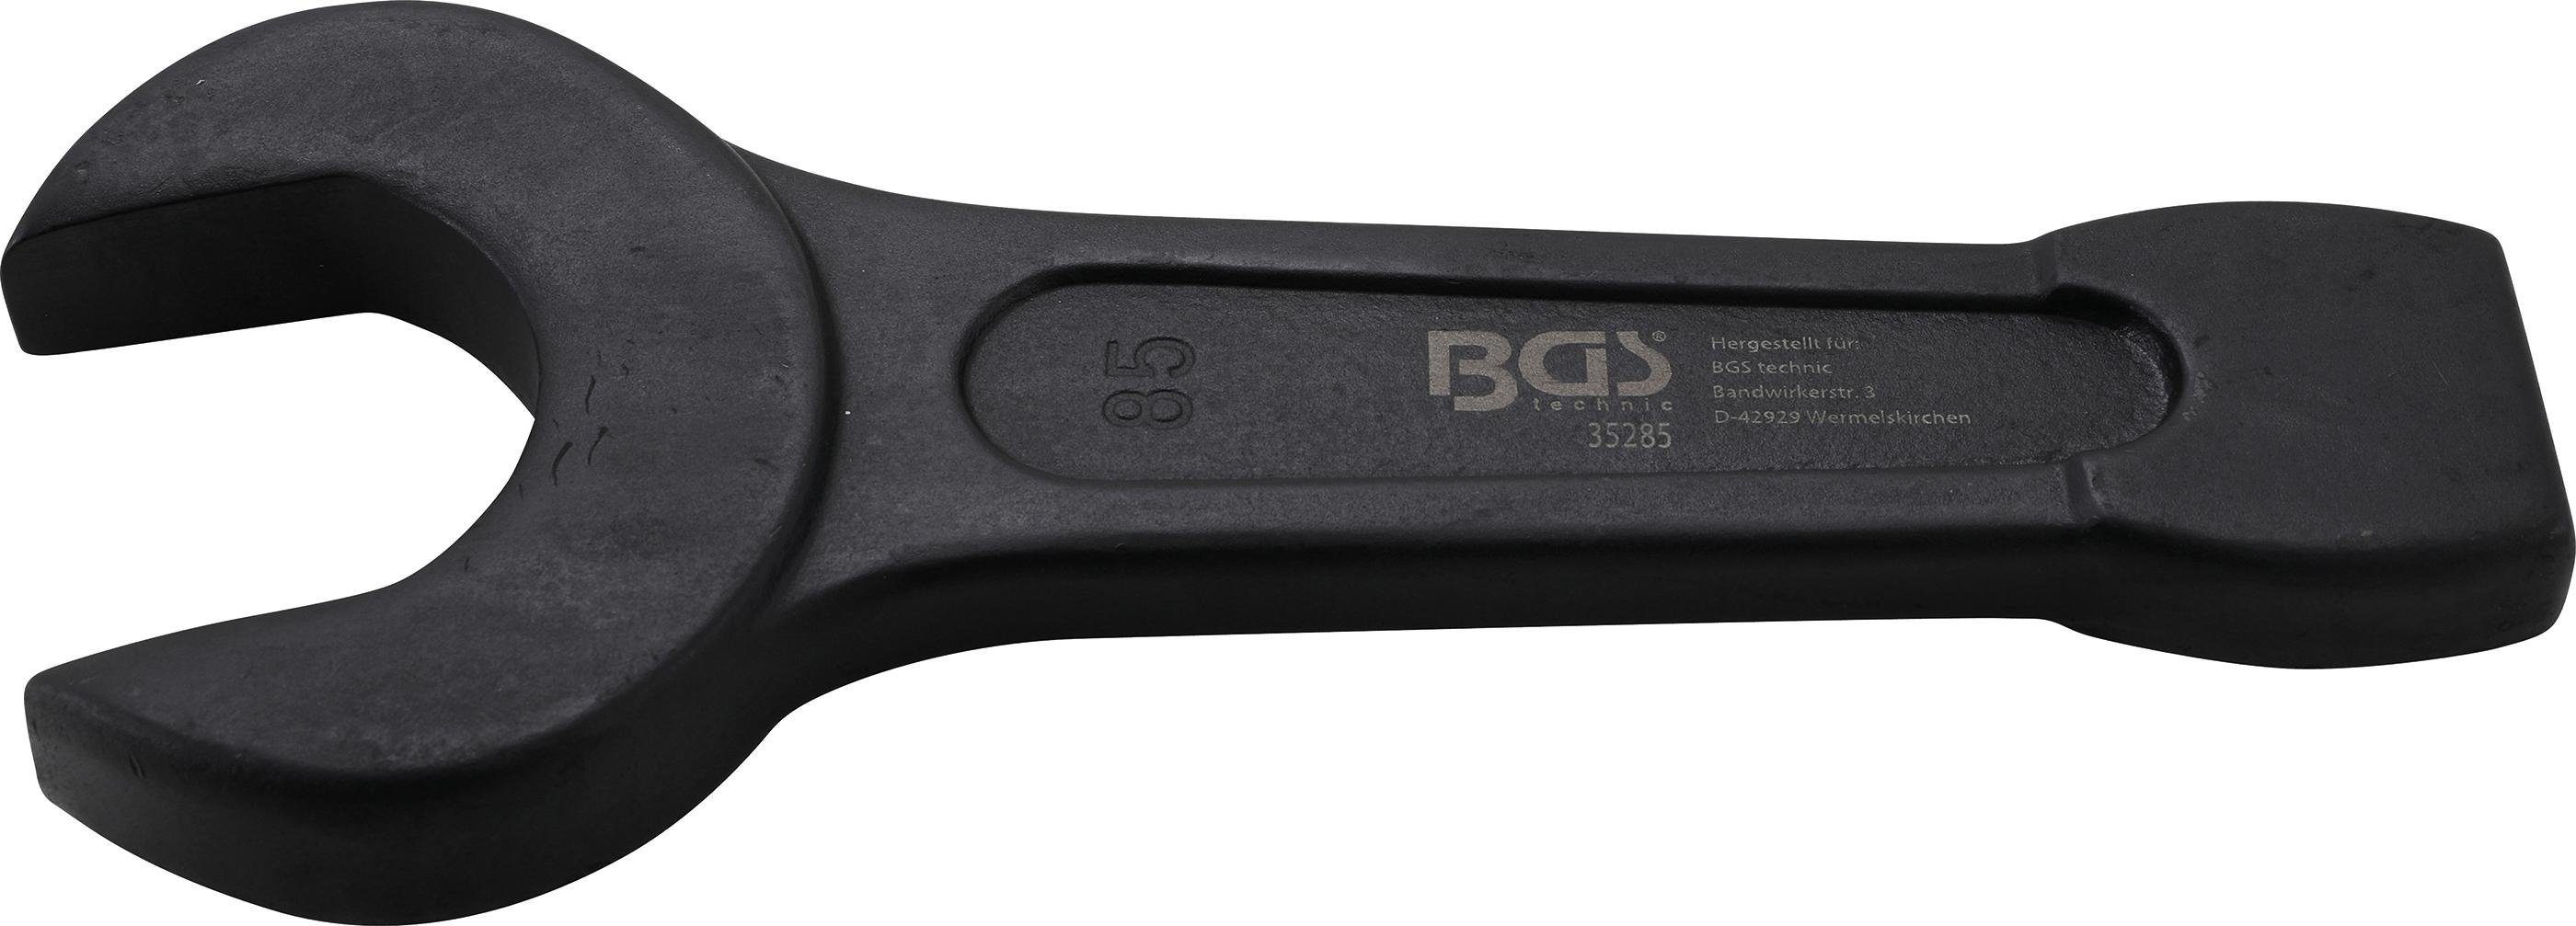 BGS technic Maulschlüssel Schlag-Maulschlüssel, SW 85 mm | Maulschlüssel